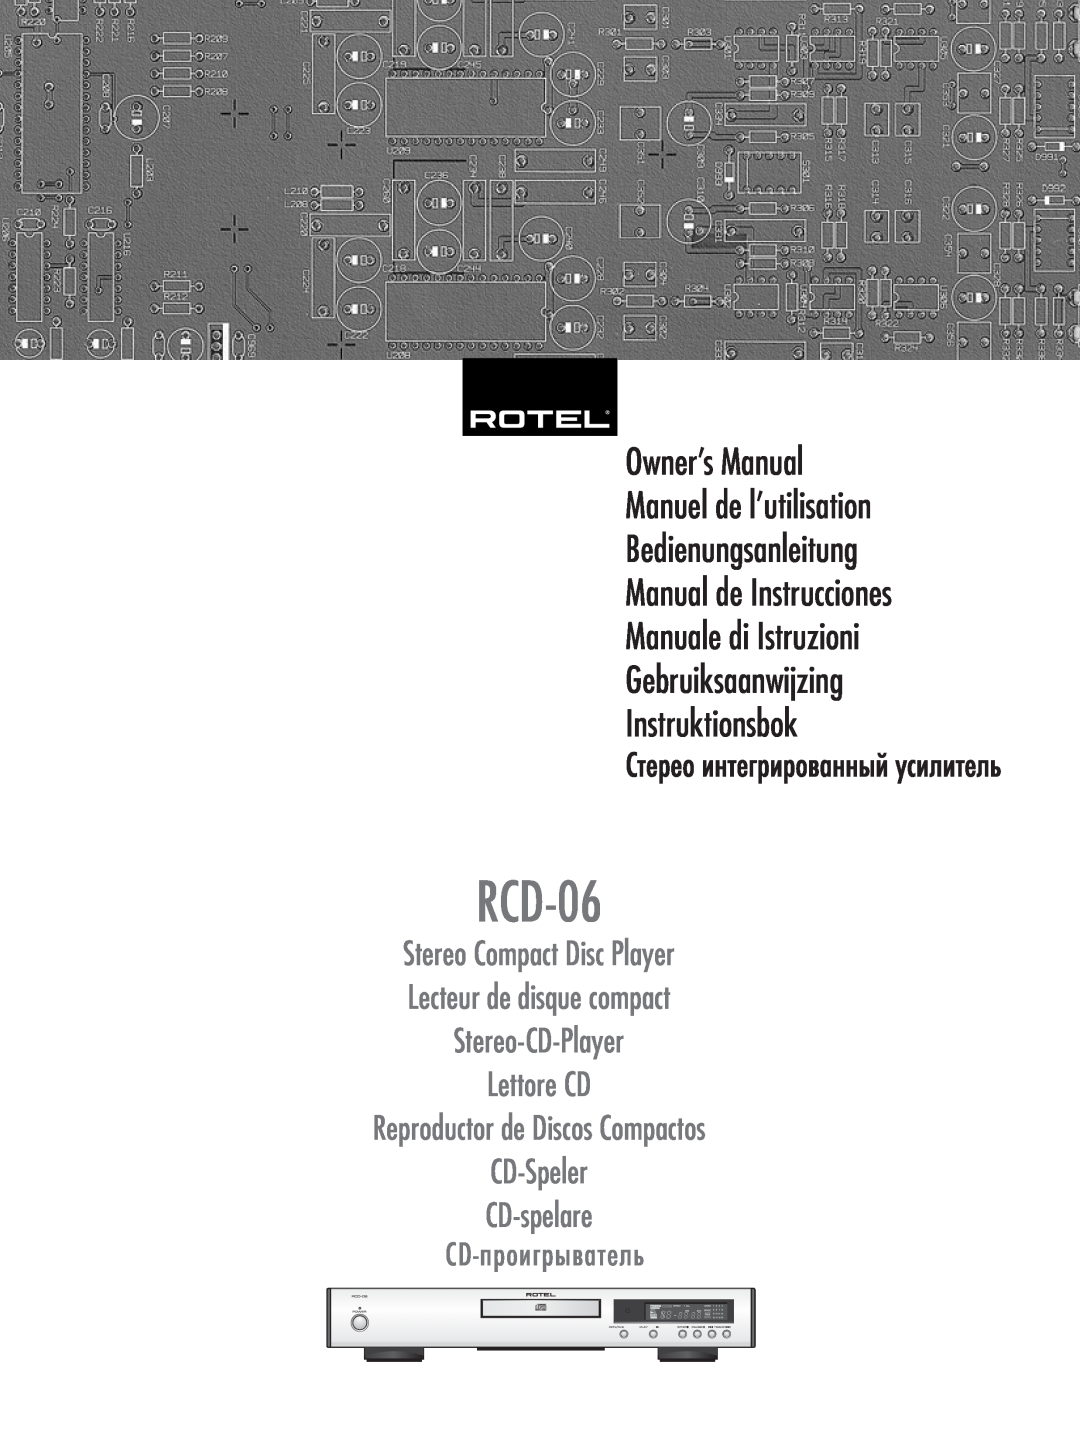 Rotel RCD-06 owner manual Owner’s Manual Manuel de l’utilisation, Bedienungsanleitung Manual de Instrucciones 